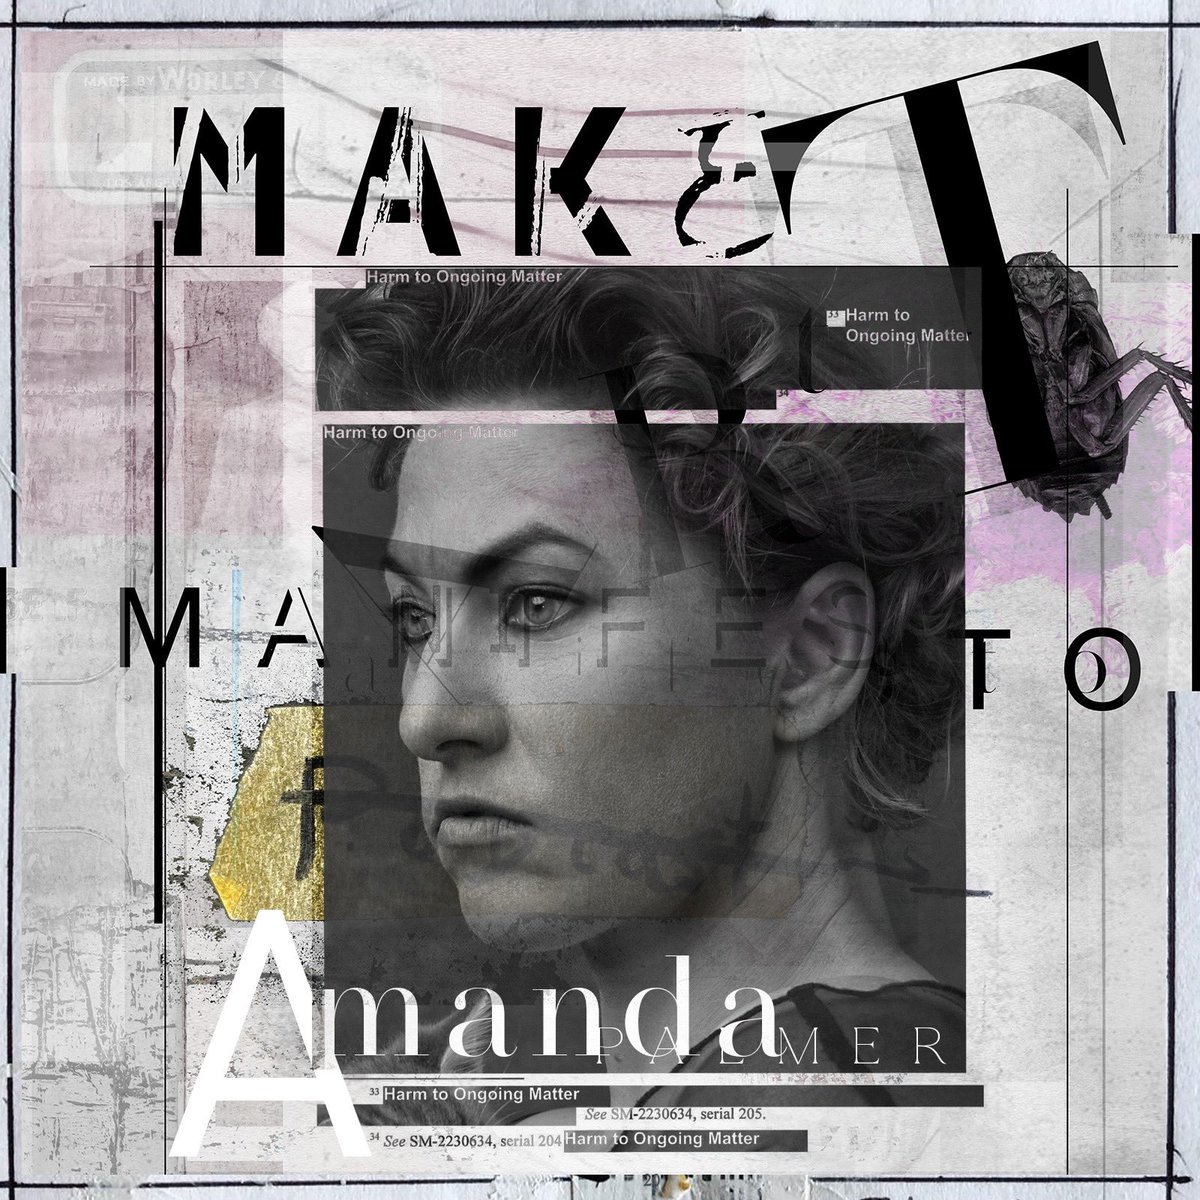 New Make Art Manifesto podcast with the awesome @amandapalmer, wherever you source your free range radio programs.